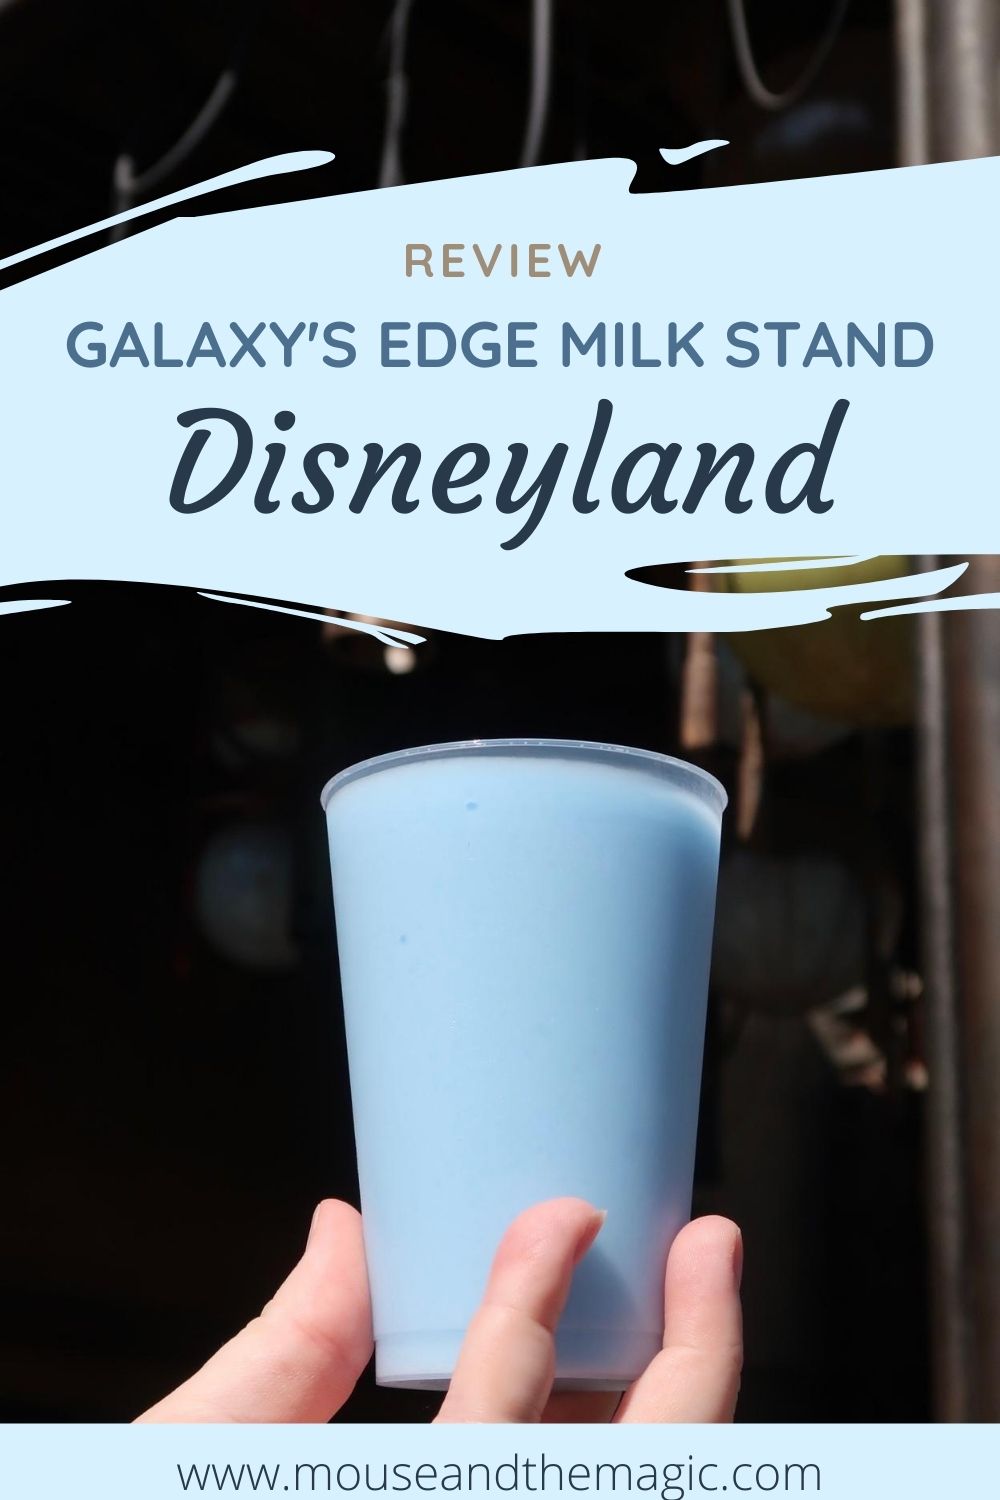 Galaxy's Edge Milk Stand at Disneyland - Review